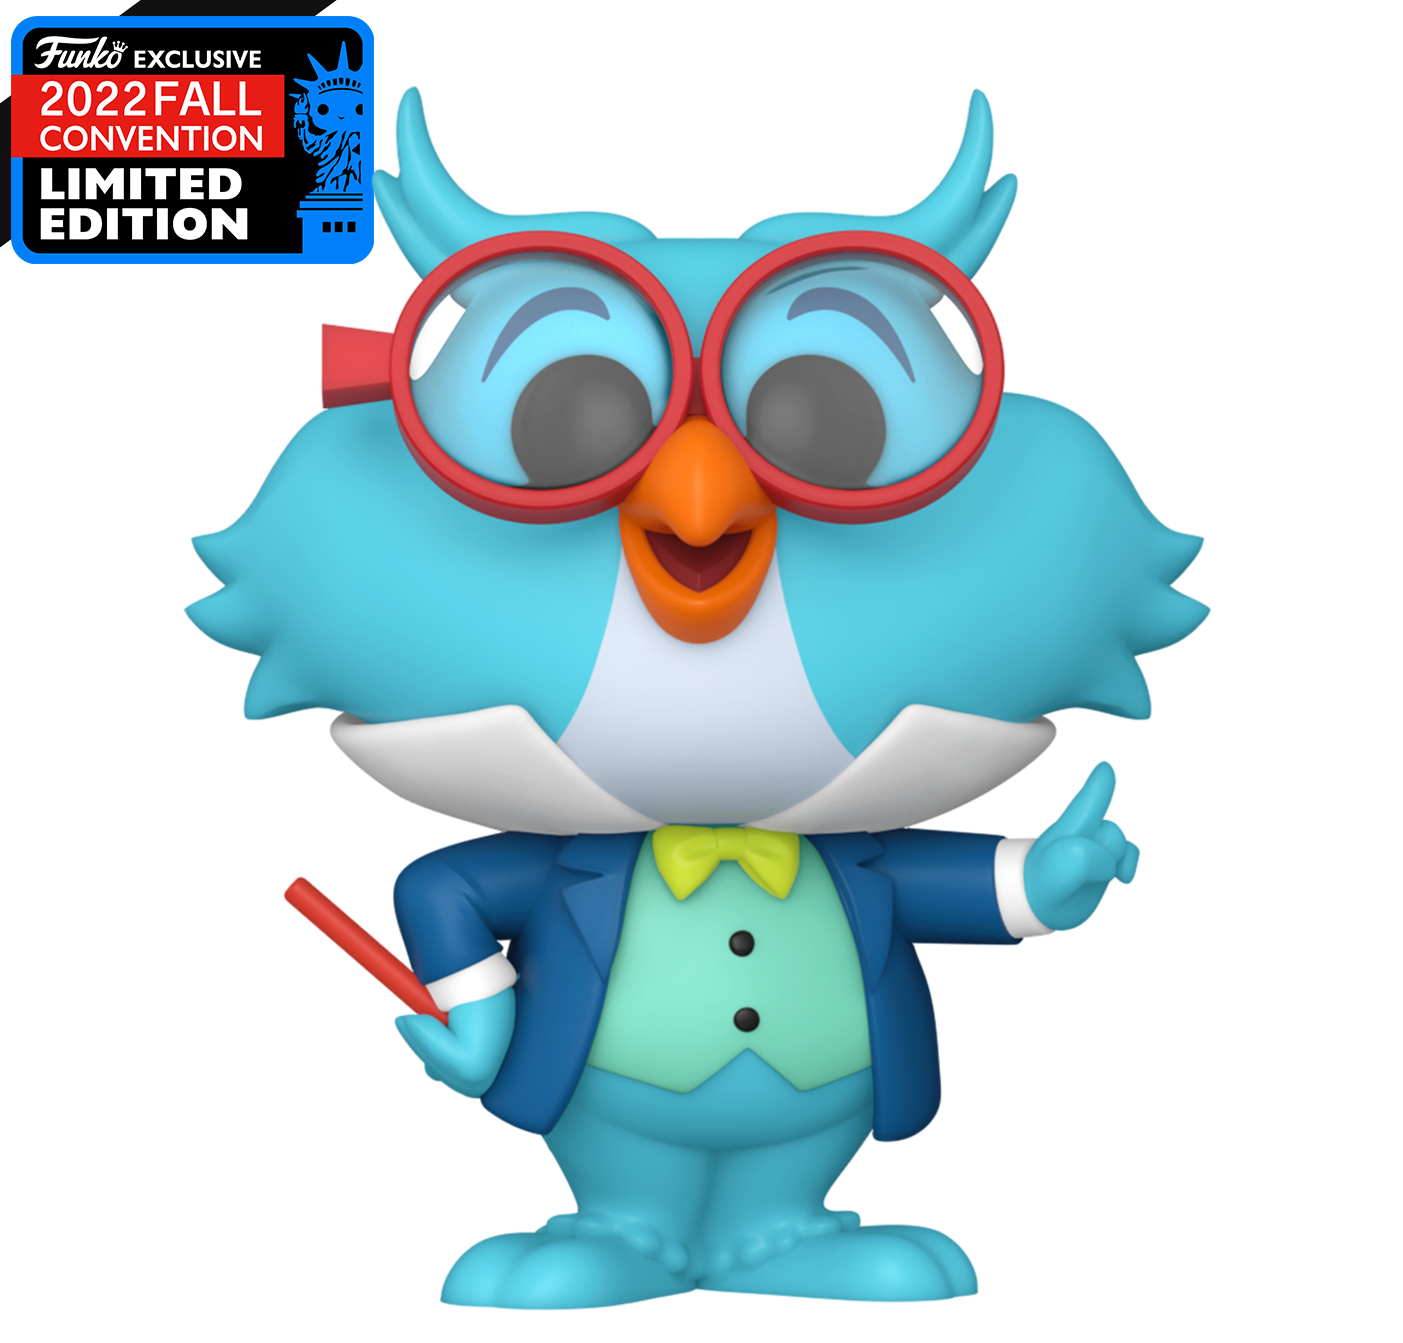 Disney - Professor Owl NYCC 2022 Fall Convention Exclusive Pop! Vinyl